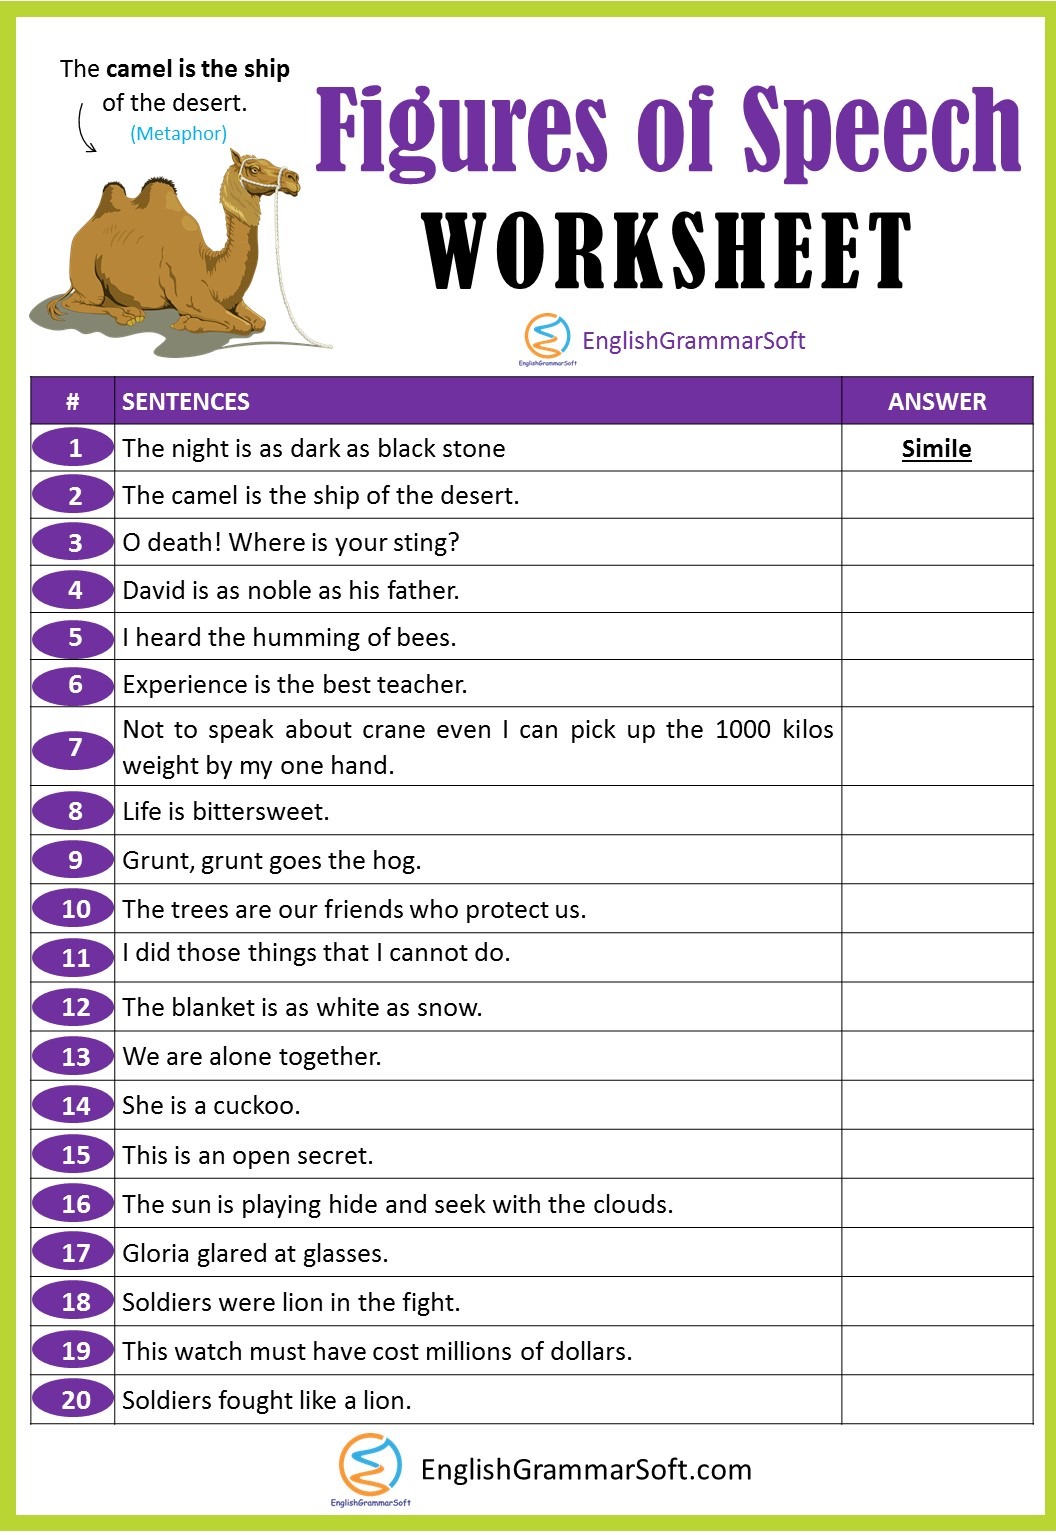 Figures of Speech Worksheet with Answers - EnglishGrammarSoft Inside Part Of Speech Worksheet Pdf